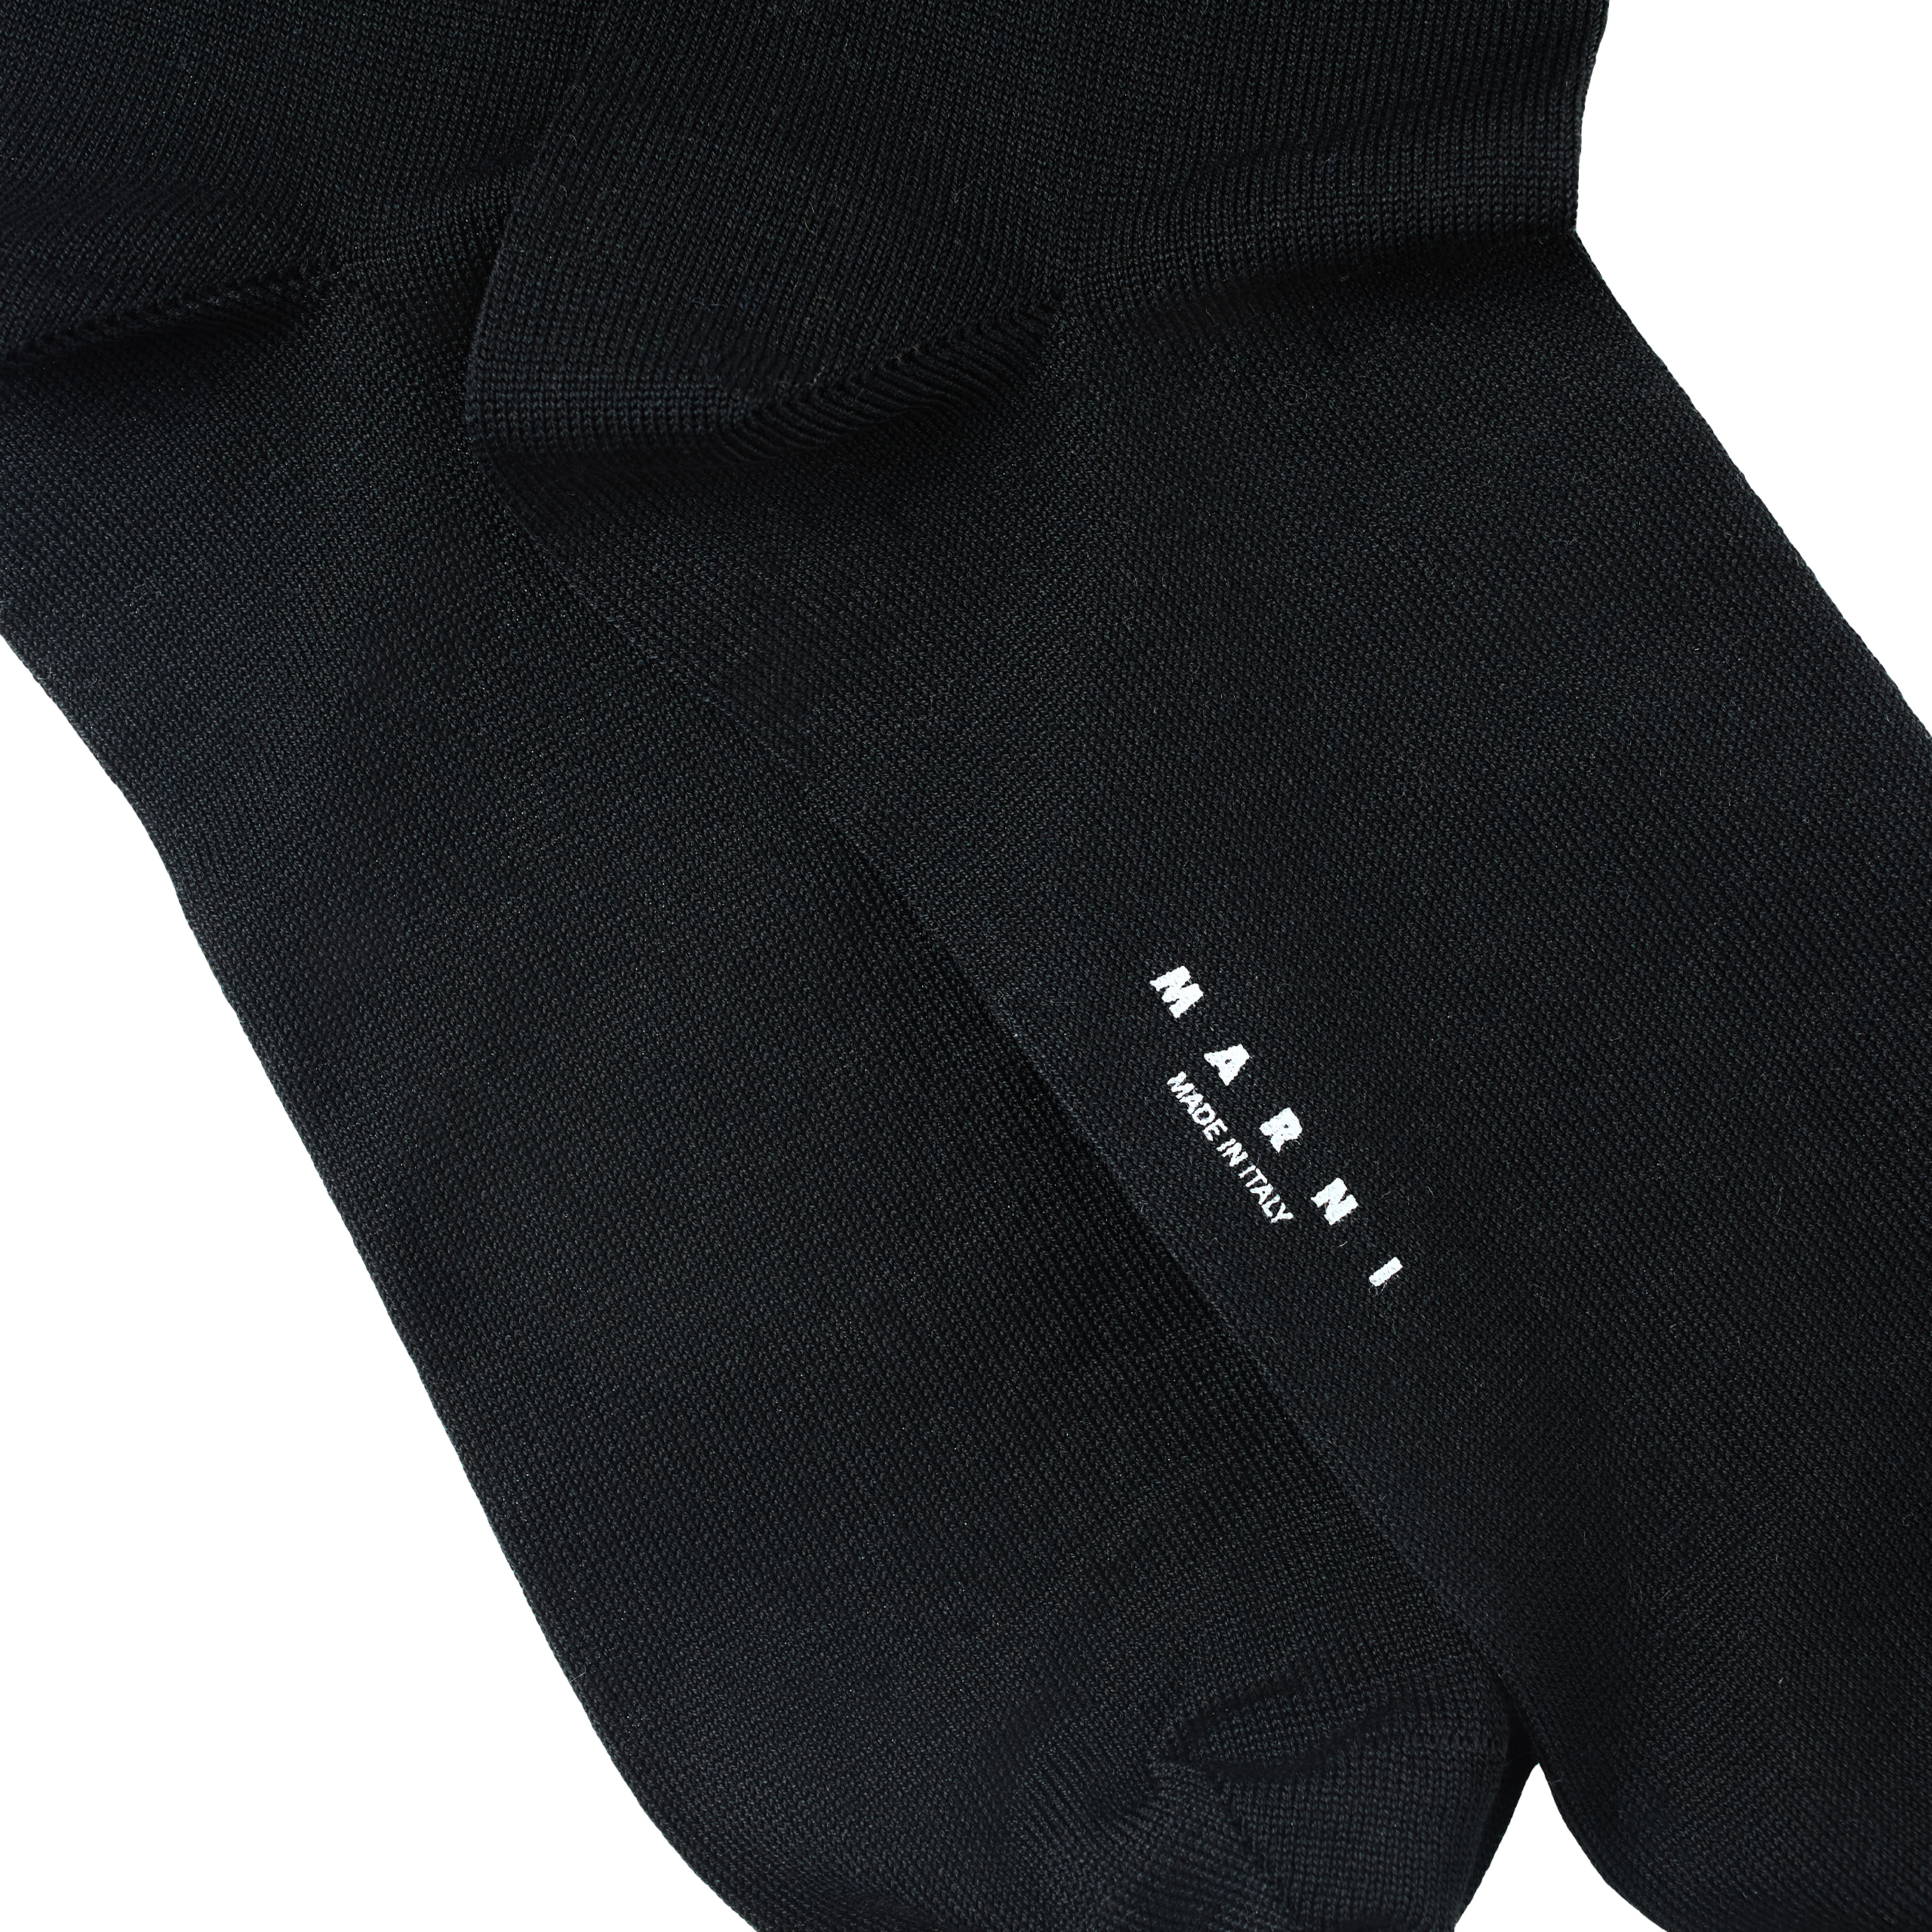 Shop Marni Black Wool Socks